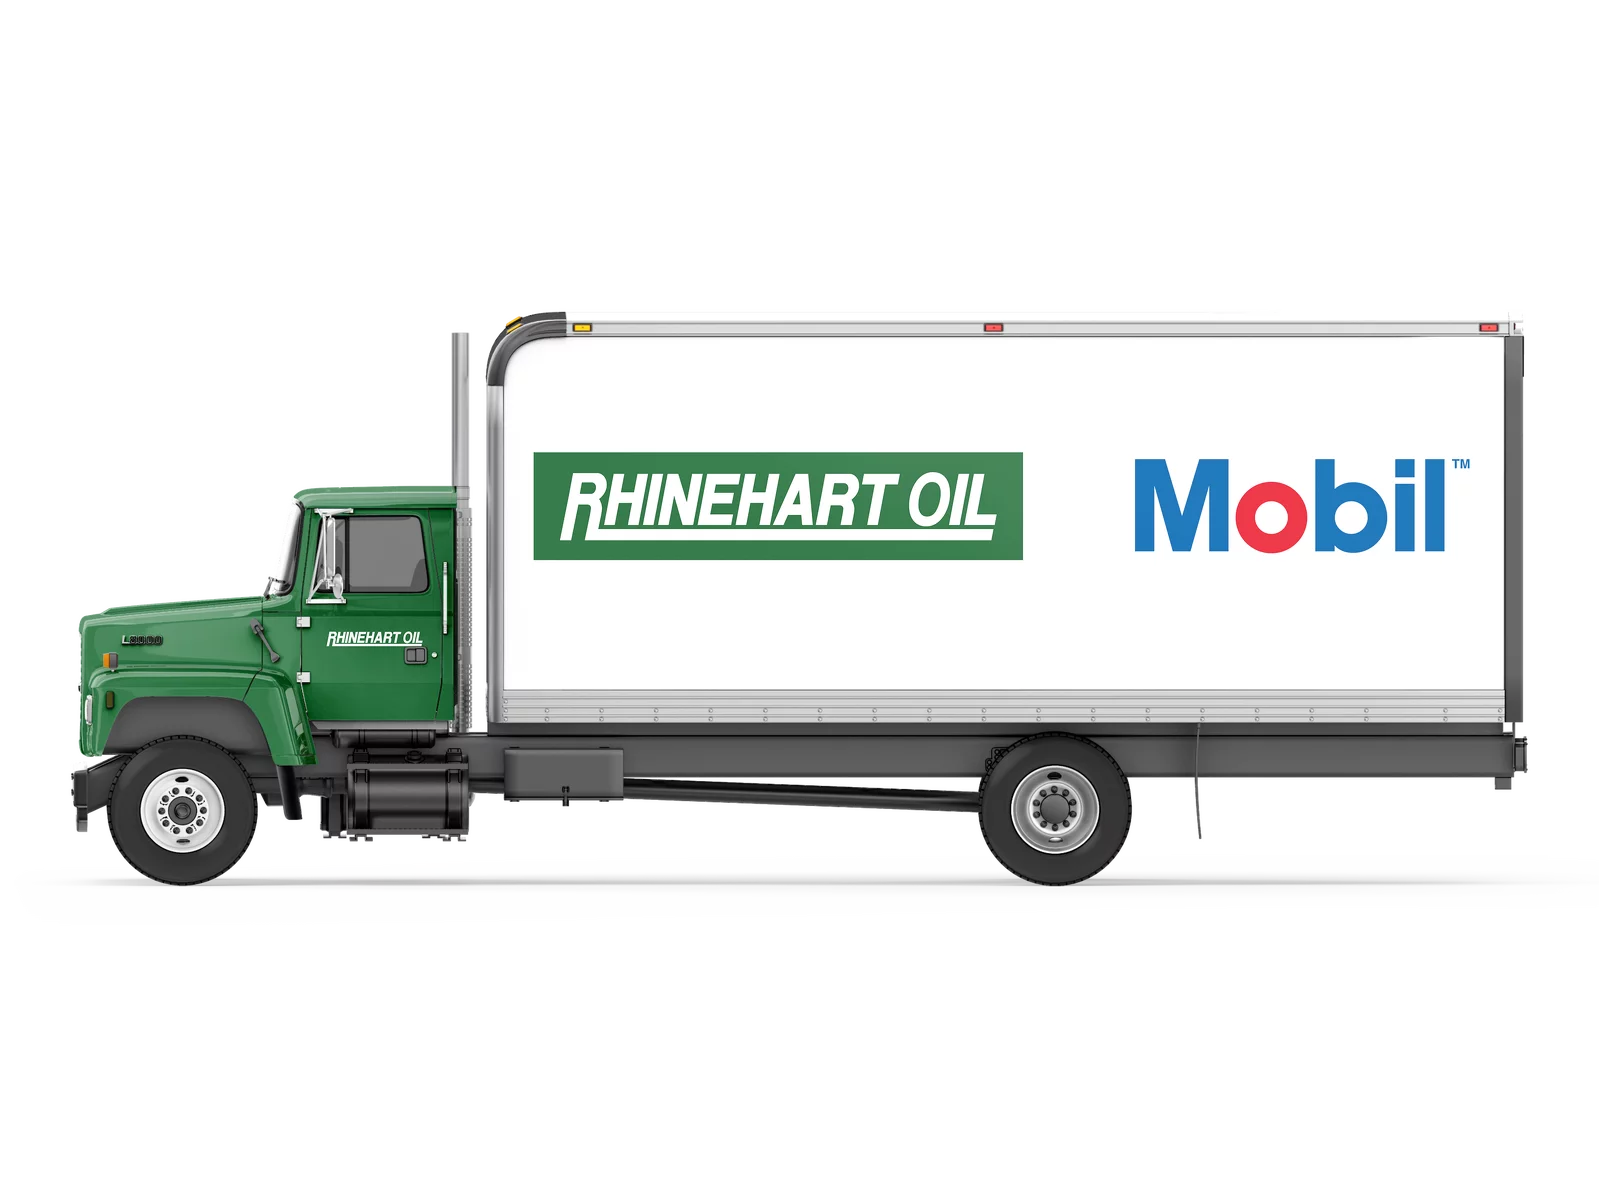  2022/08/Rhinehart-Mobil-Box-Truck.png 